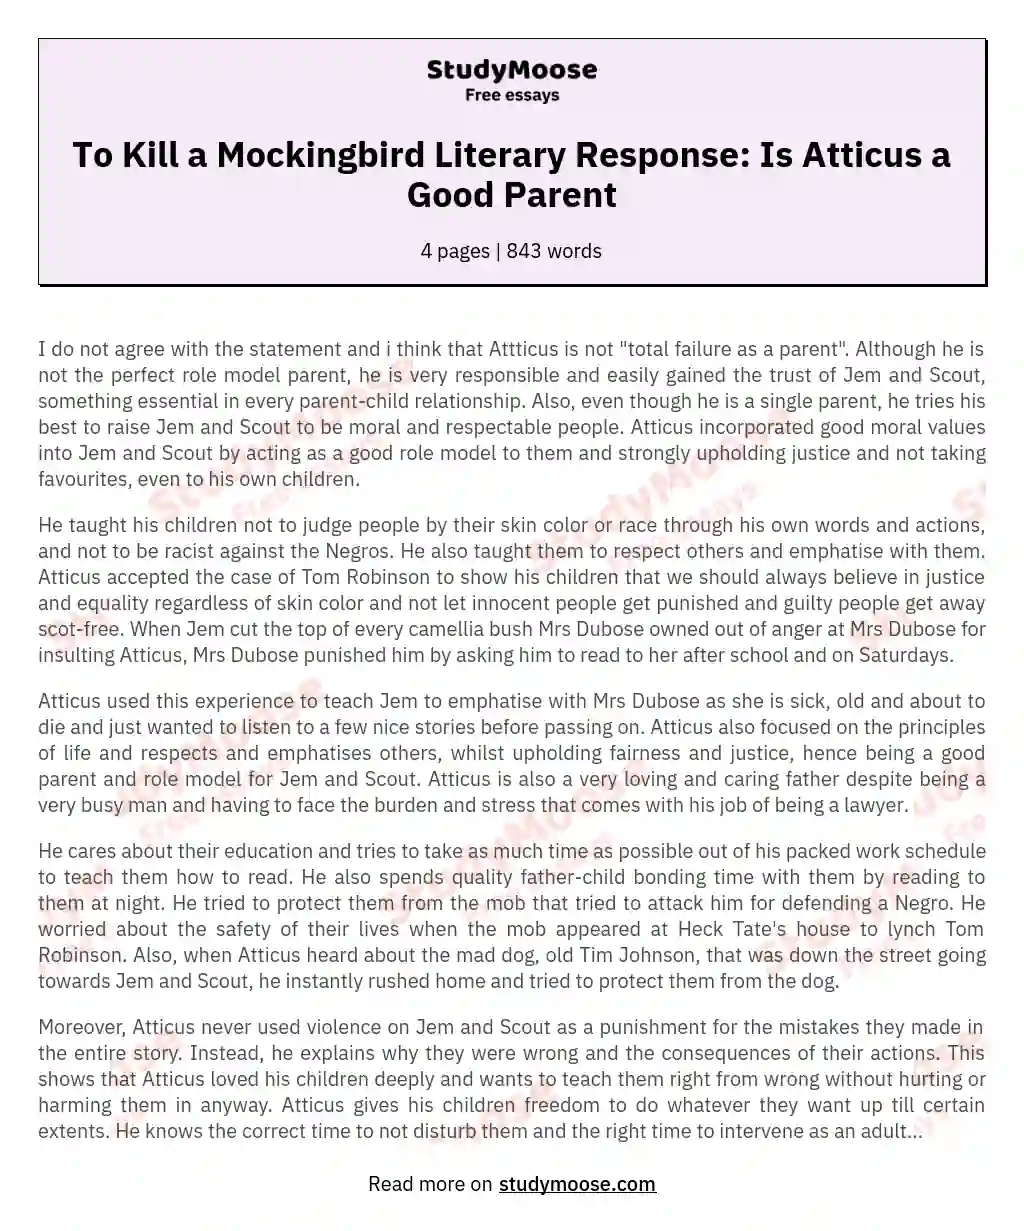 To Kill a Mockingbird Literary Response: Is Atticus a Good Parent essay